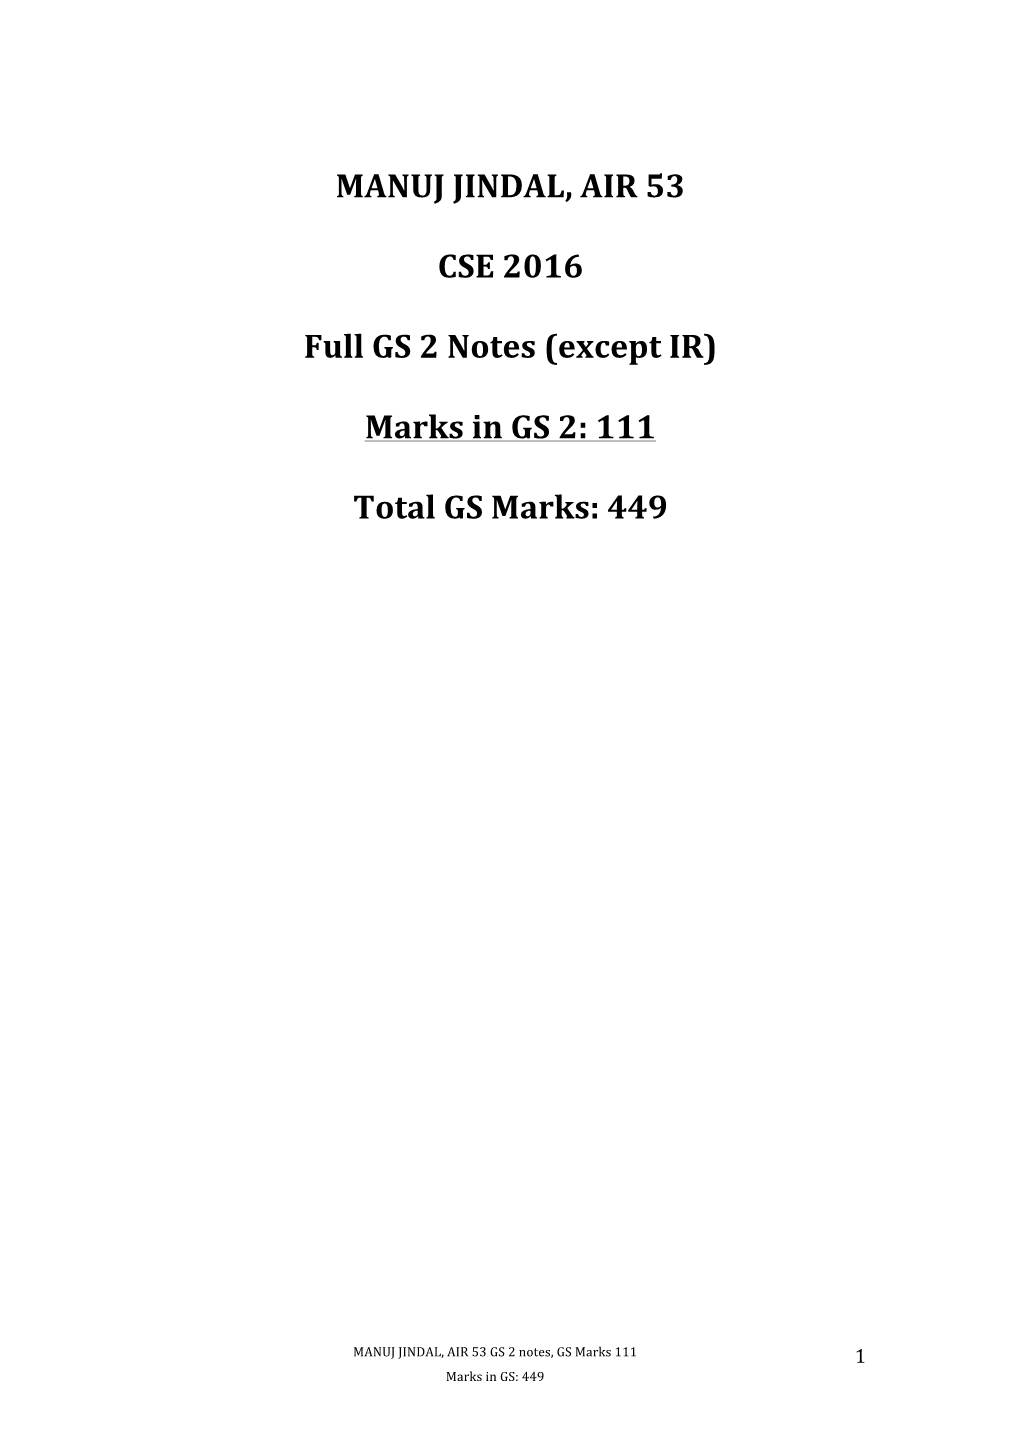 MANUJ JINDAL, AIR 53 CSE 2016 Full GS 2 Notes (Except